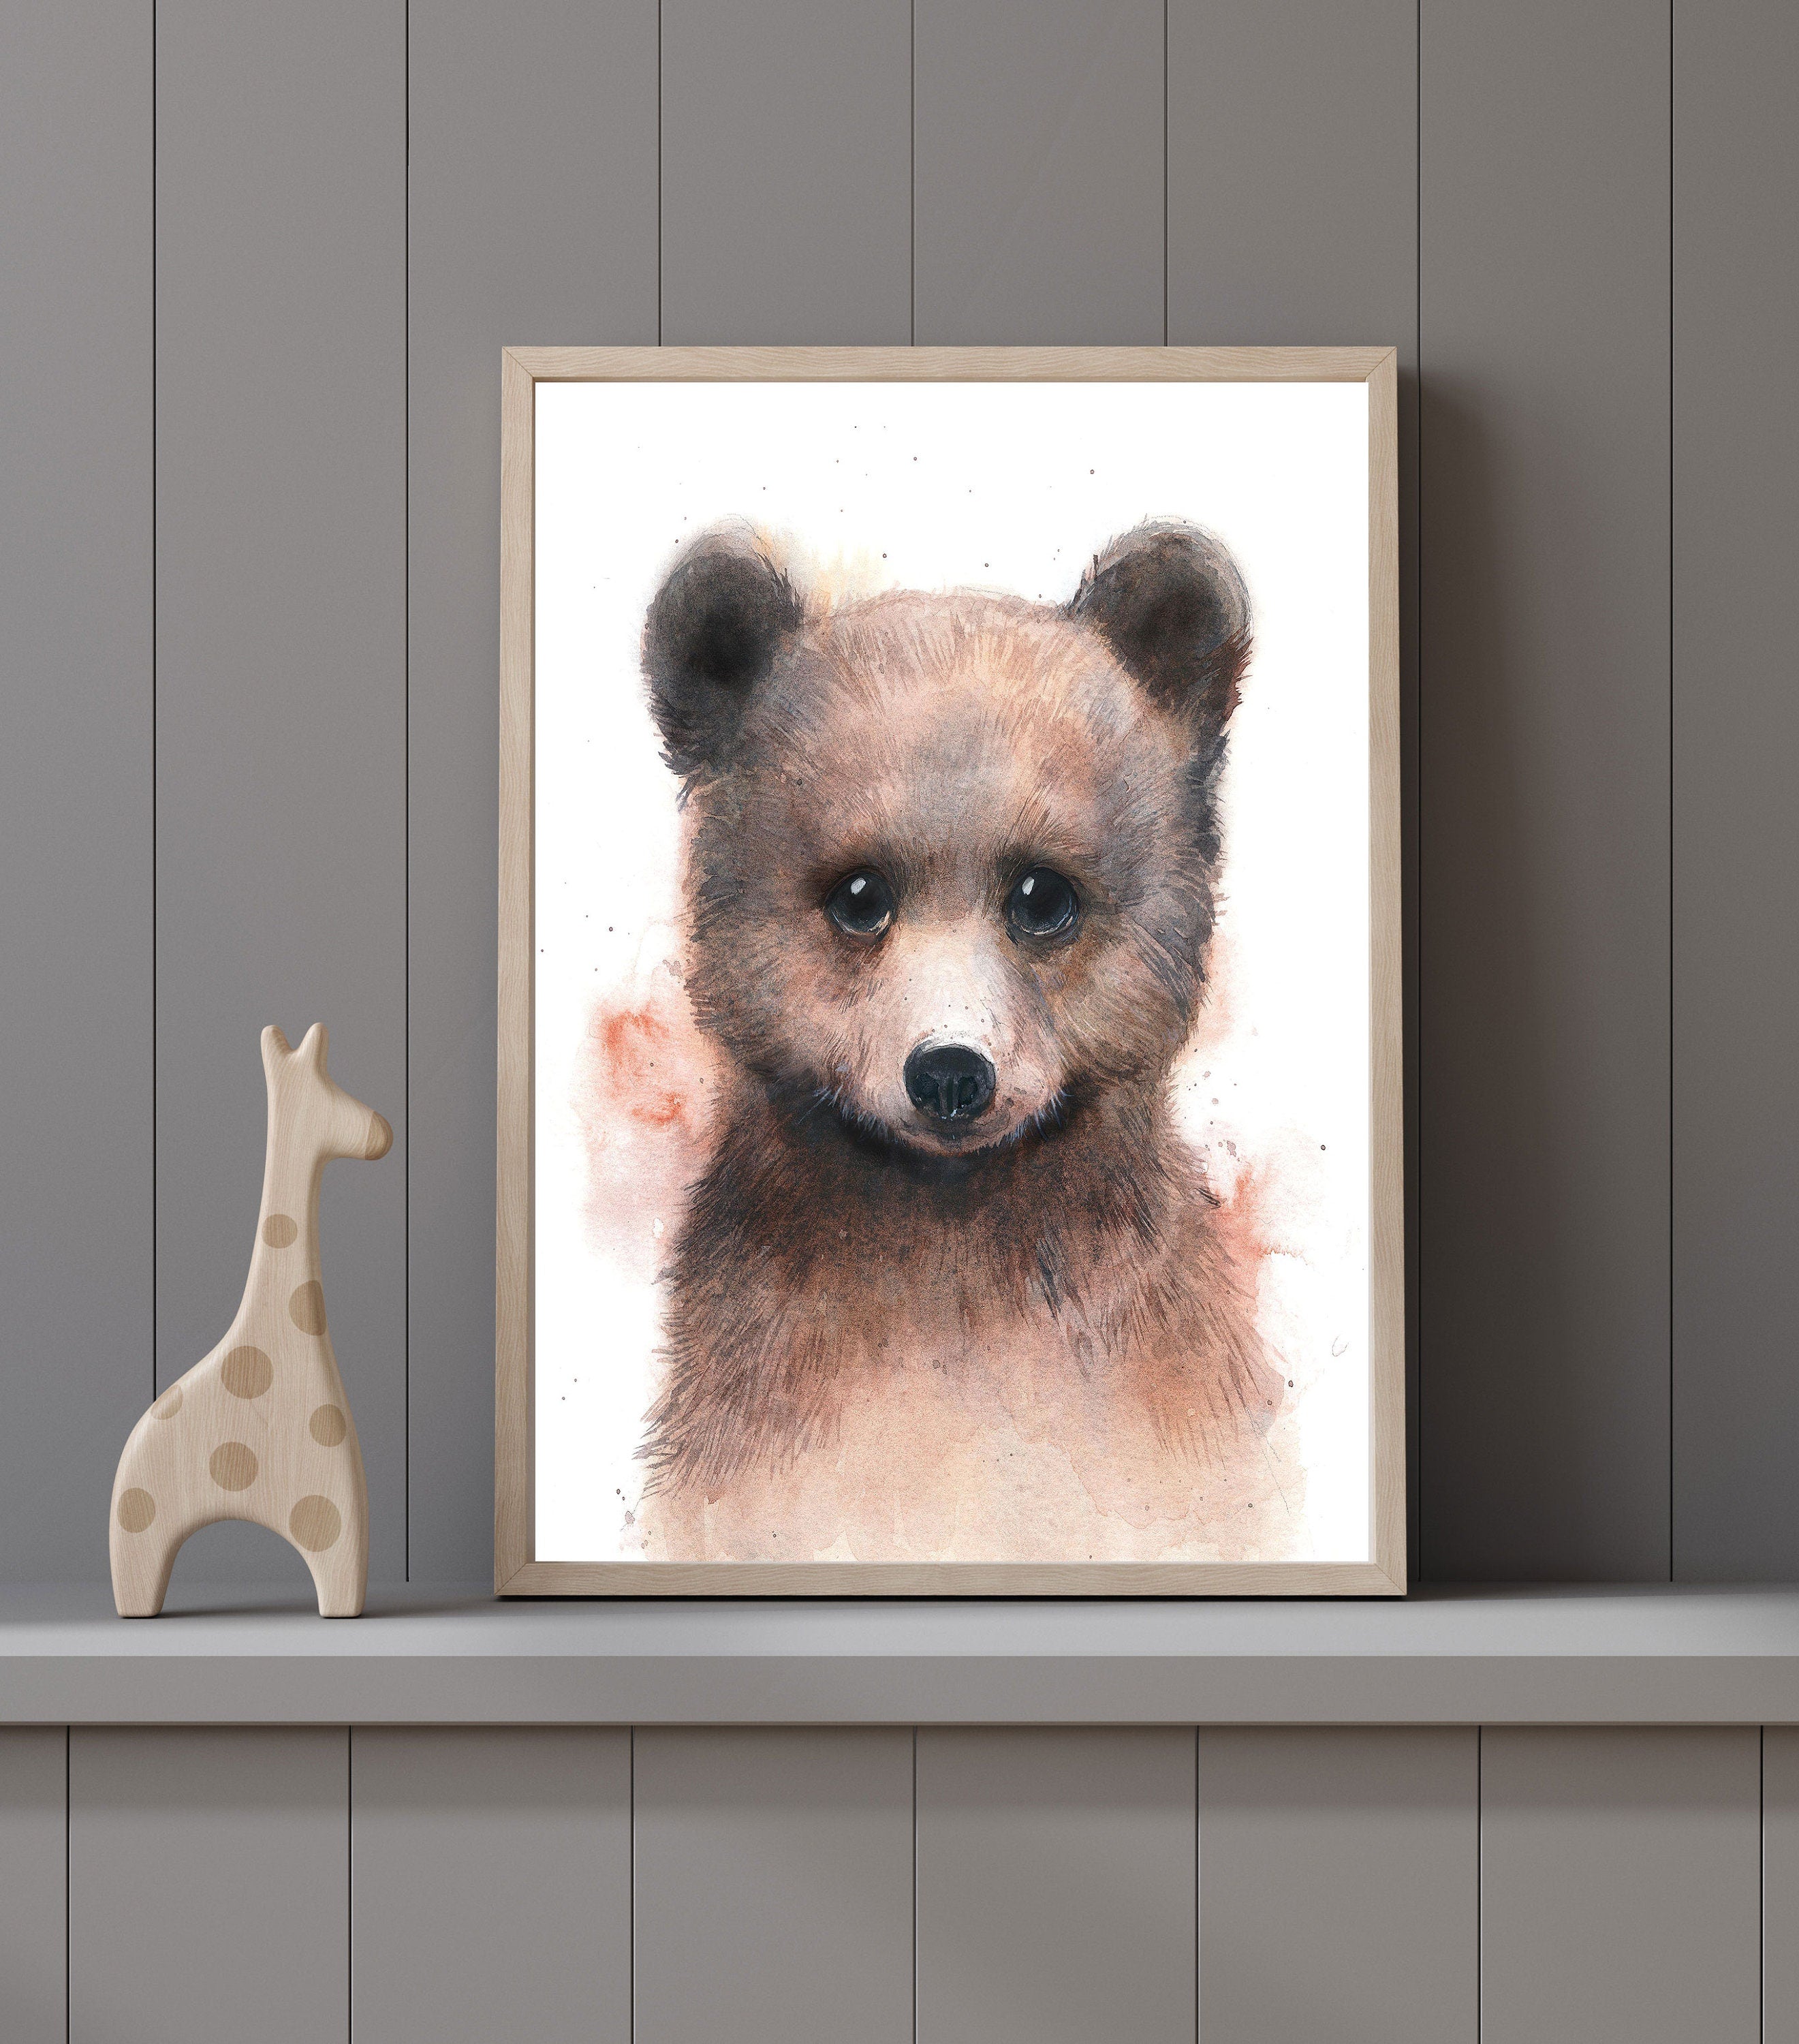 Baby Bear Print, Woodland Nursery Wall Art, Baby Bear Decor, Woodland Baby Animal, Baby Bear Nursery Print, Baby Bear Wall Art, Bear Prints